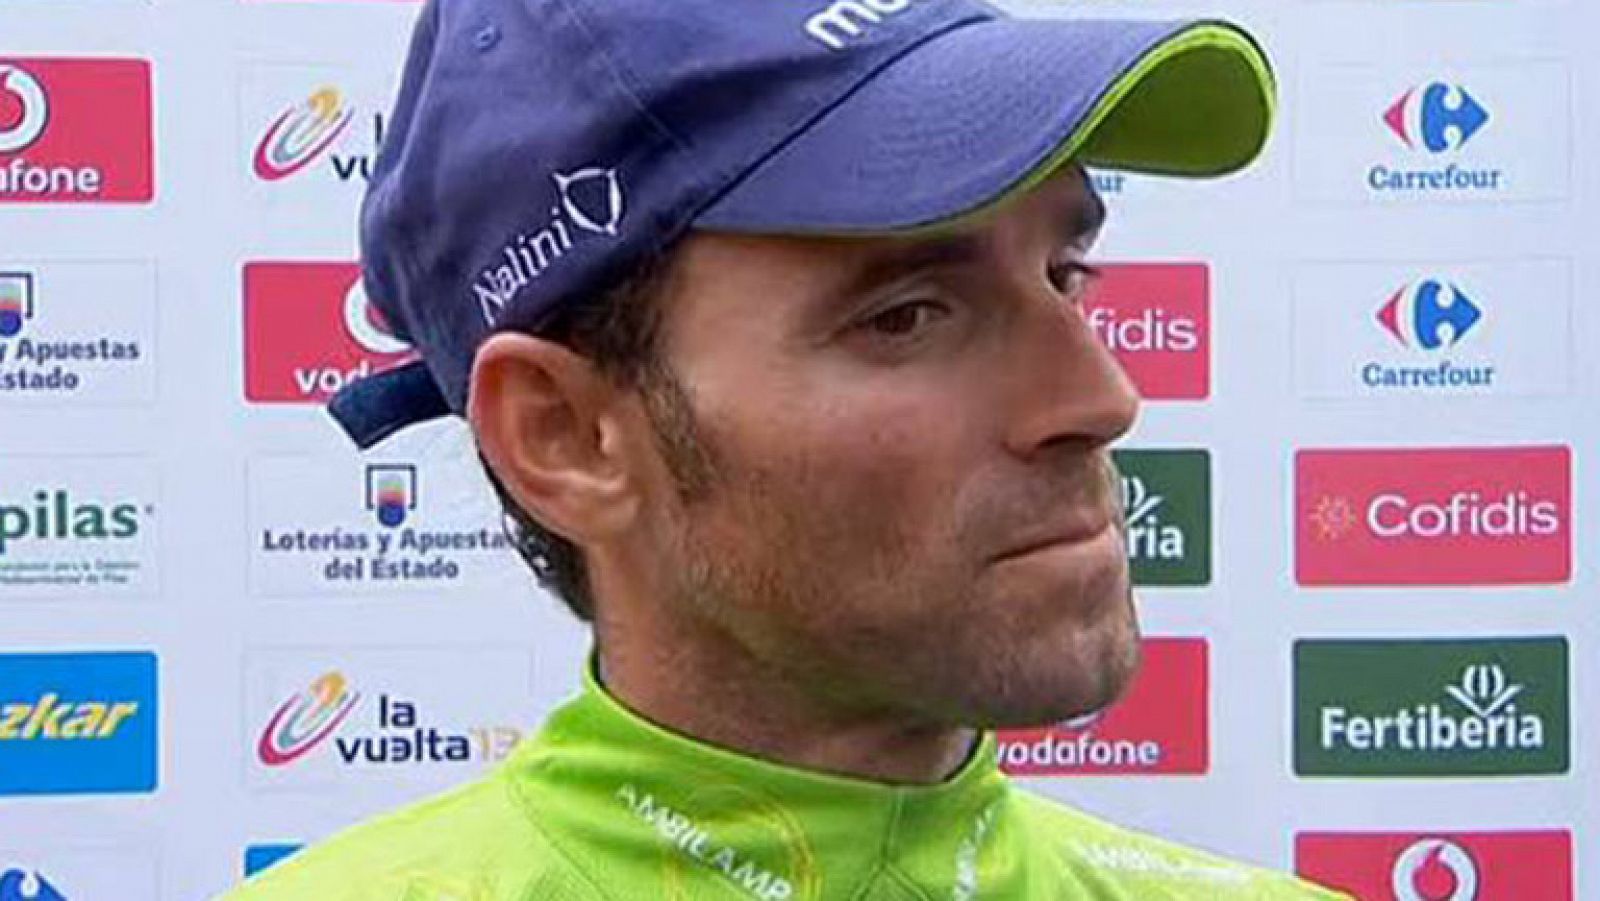 Valverde: "He visto a Nibali sufriendo"